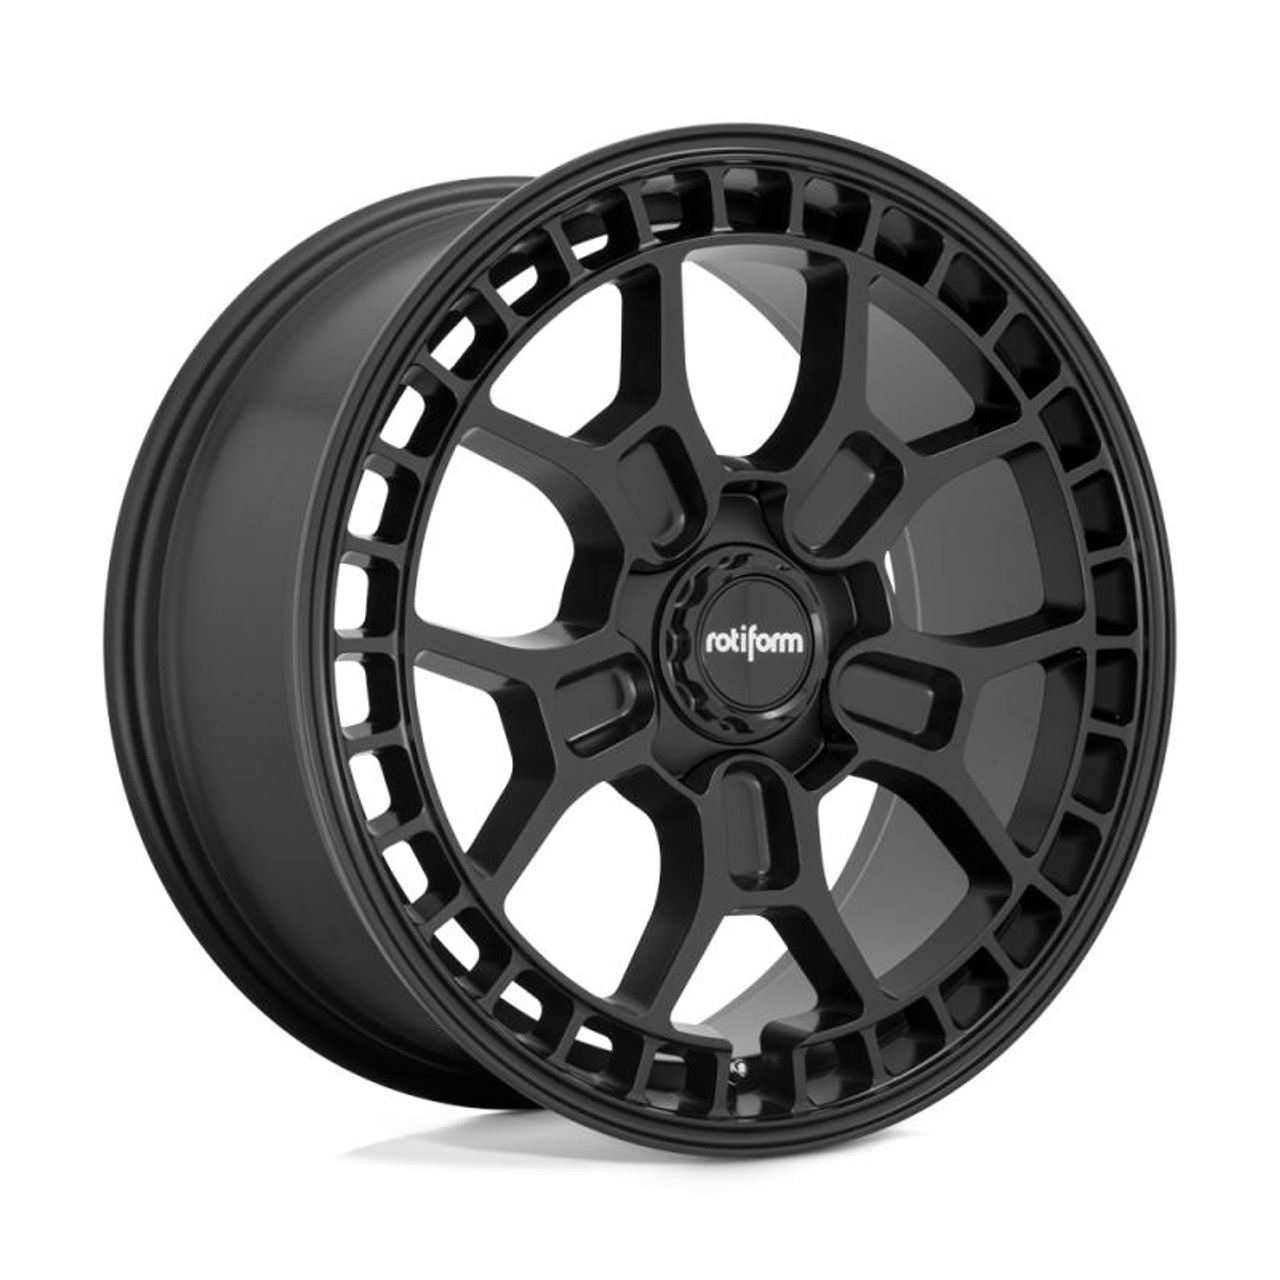  Rotiform R180 ZMO-M Wheel 19x8.5 5x112 45 Offset - Matte Black - R1801985F8+45 